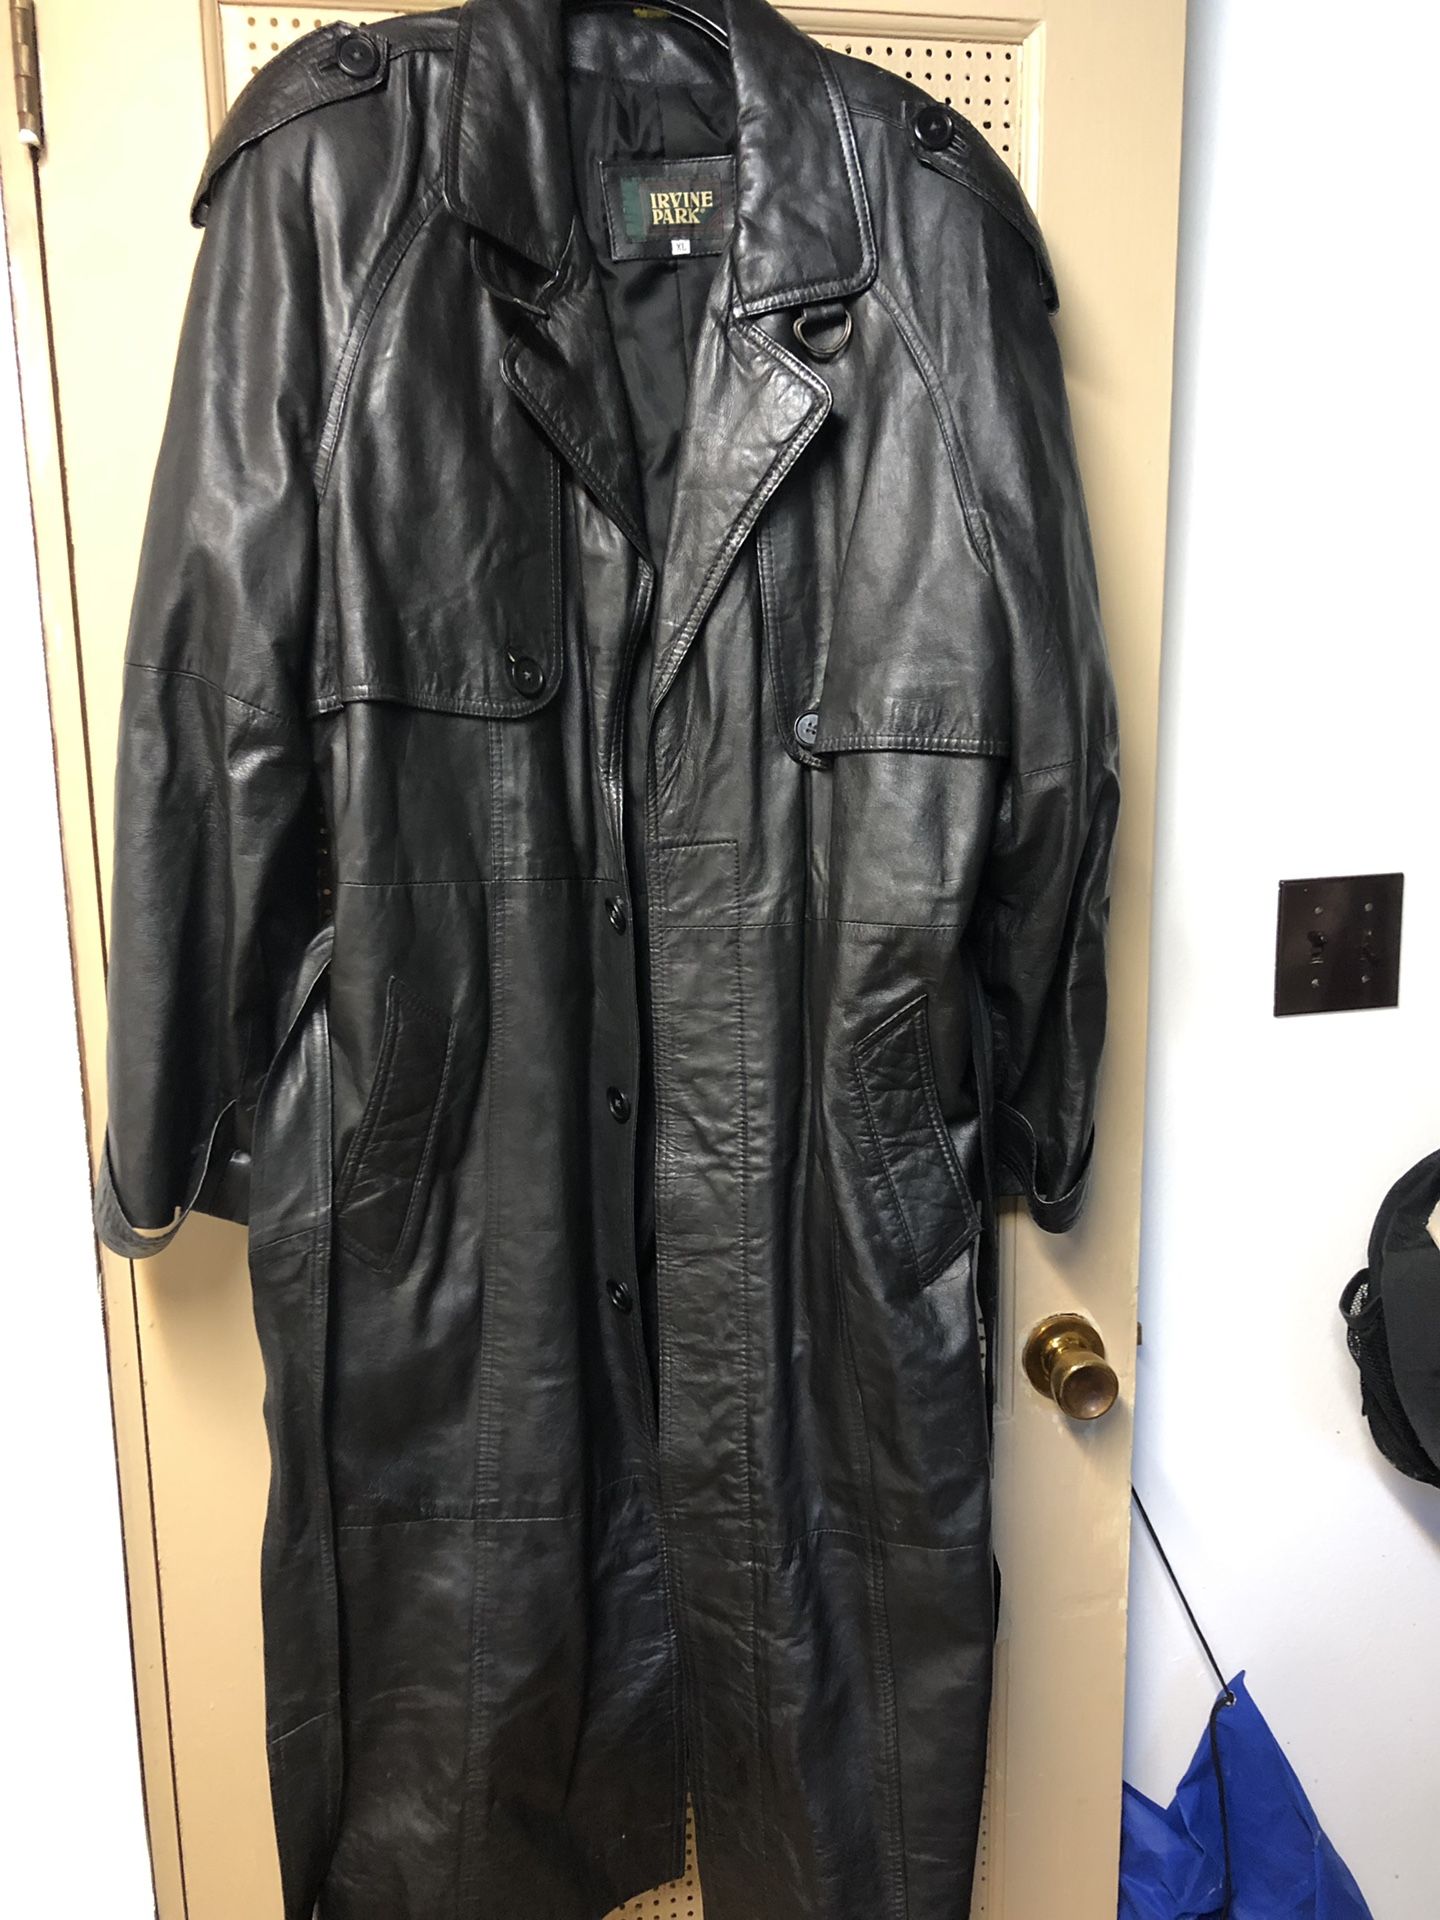 Irvine Park full length XL Leather jacket